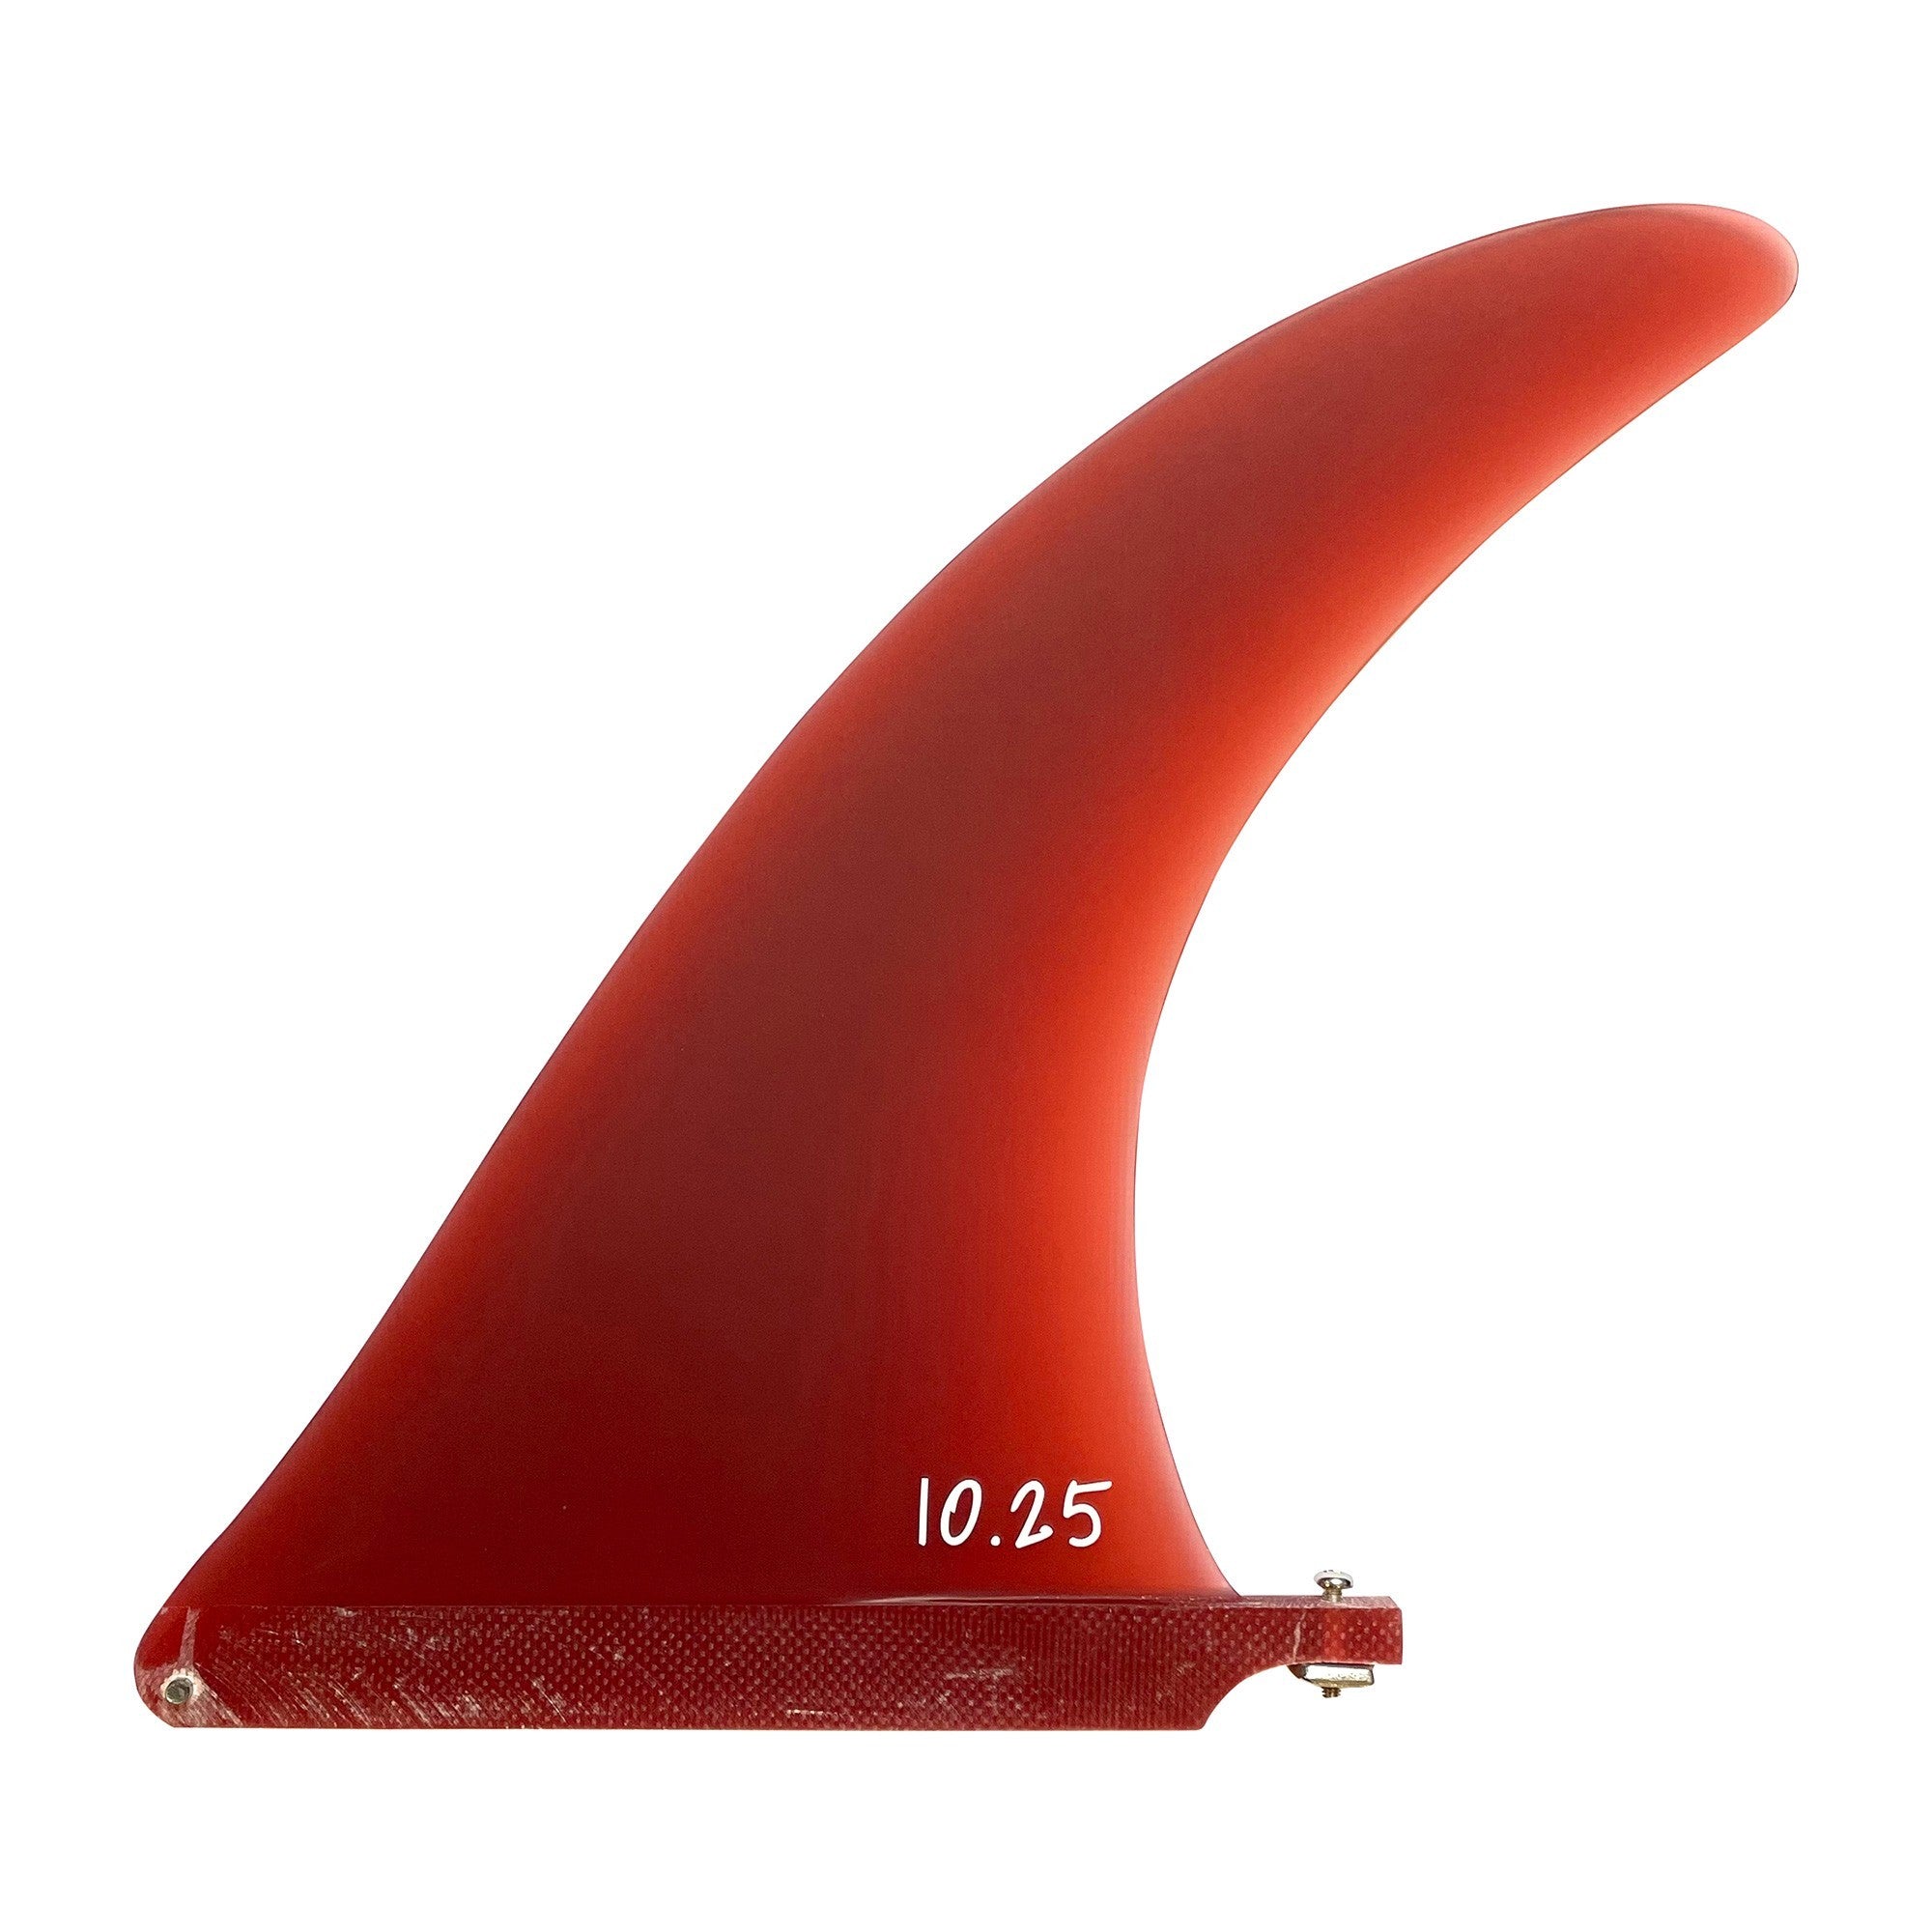 SISTEMA DE SURF - Aleta única de fibra de vidrio Dolphin (caja de EE. UU.) - 8.5" - Rojo